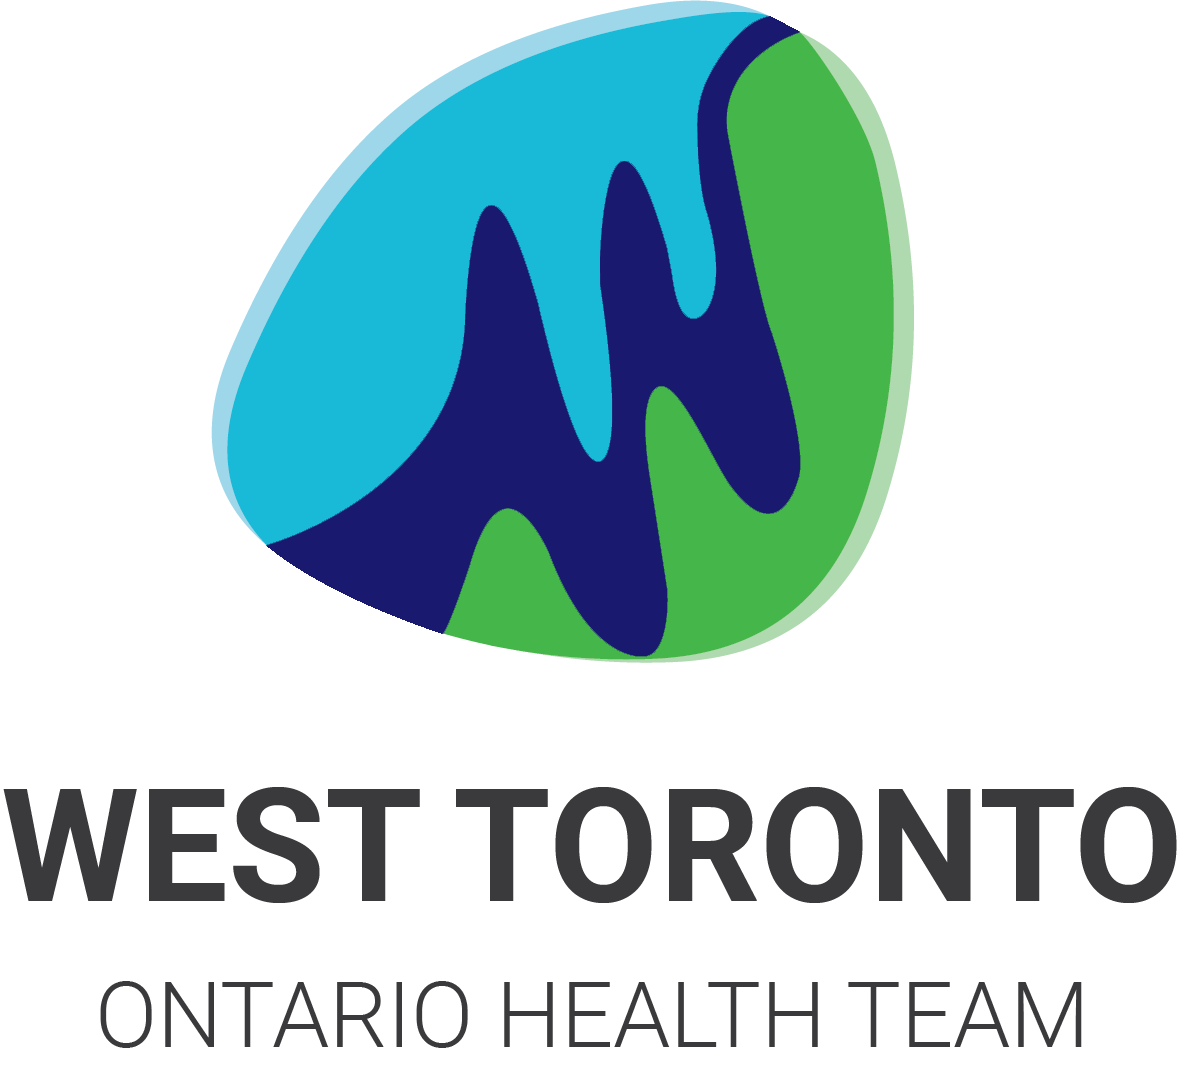 West Toronto Ontario Health Team